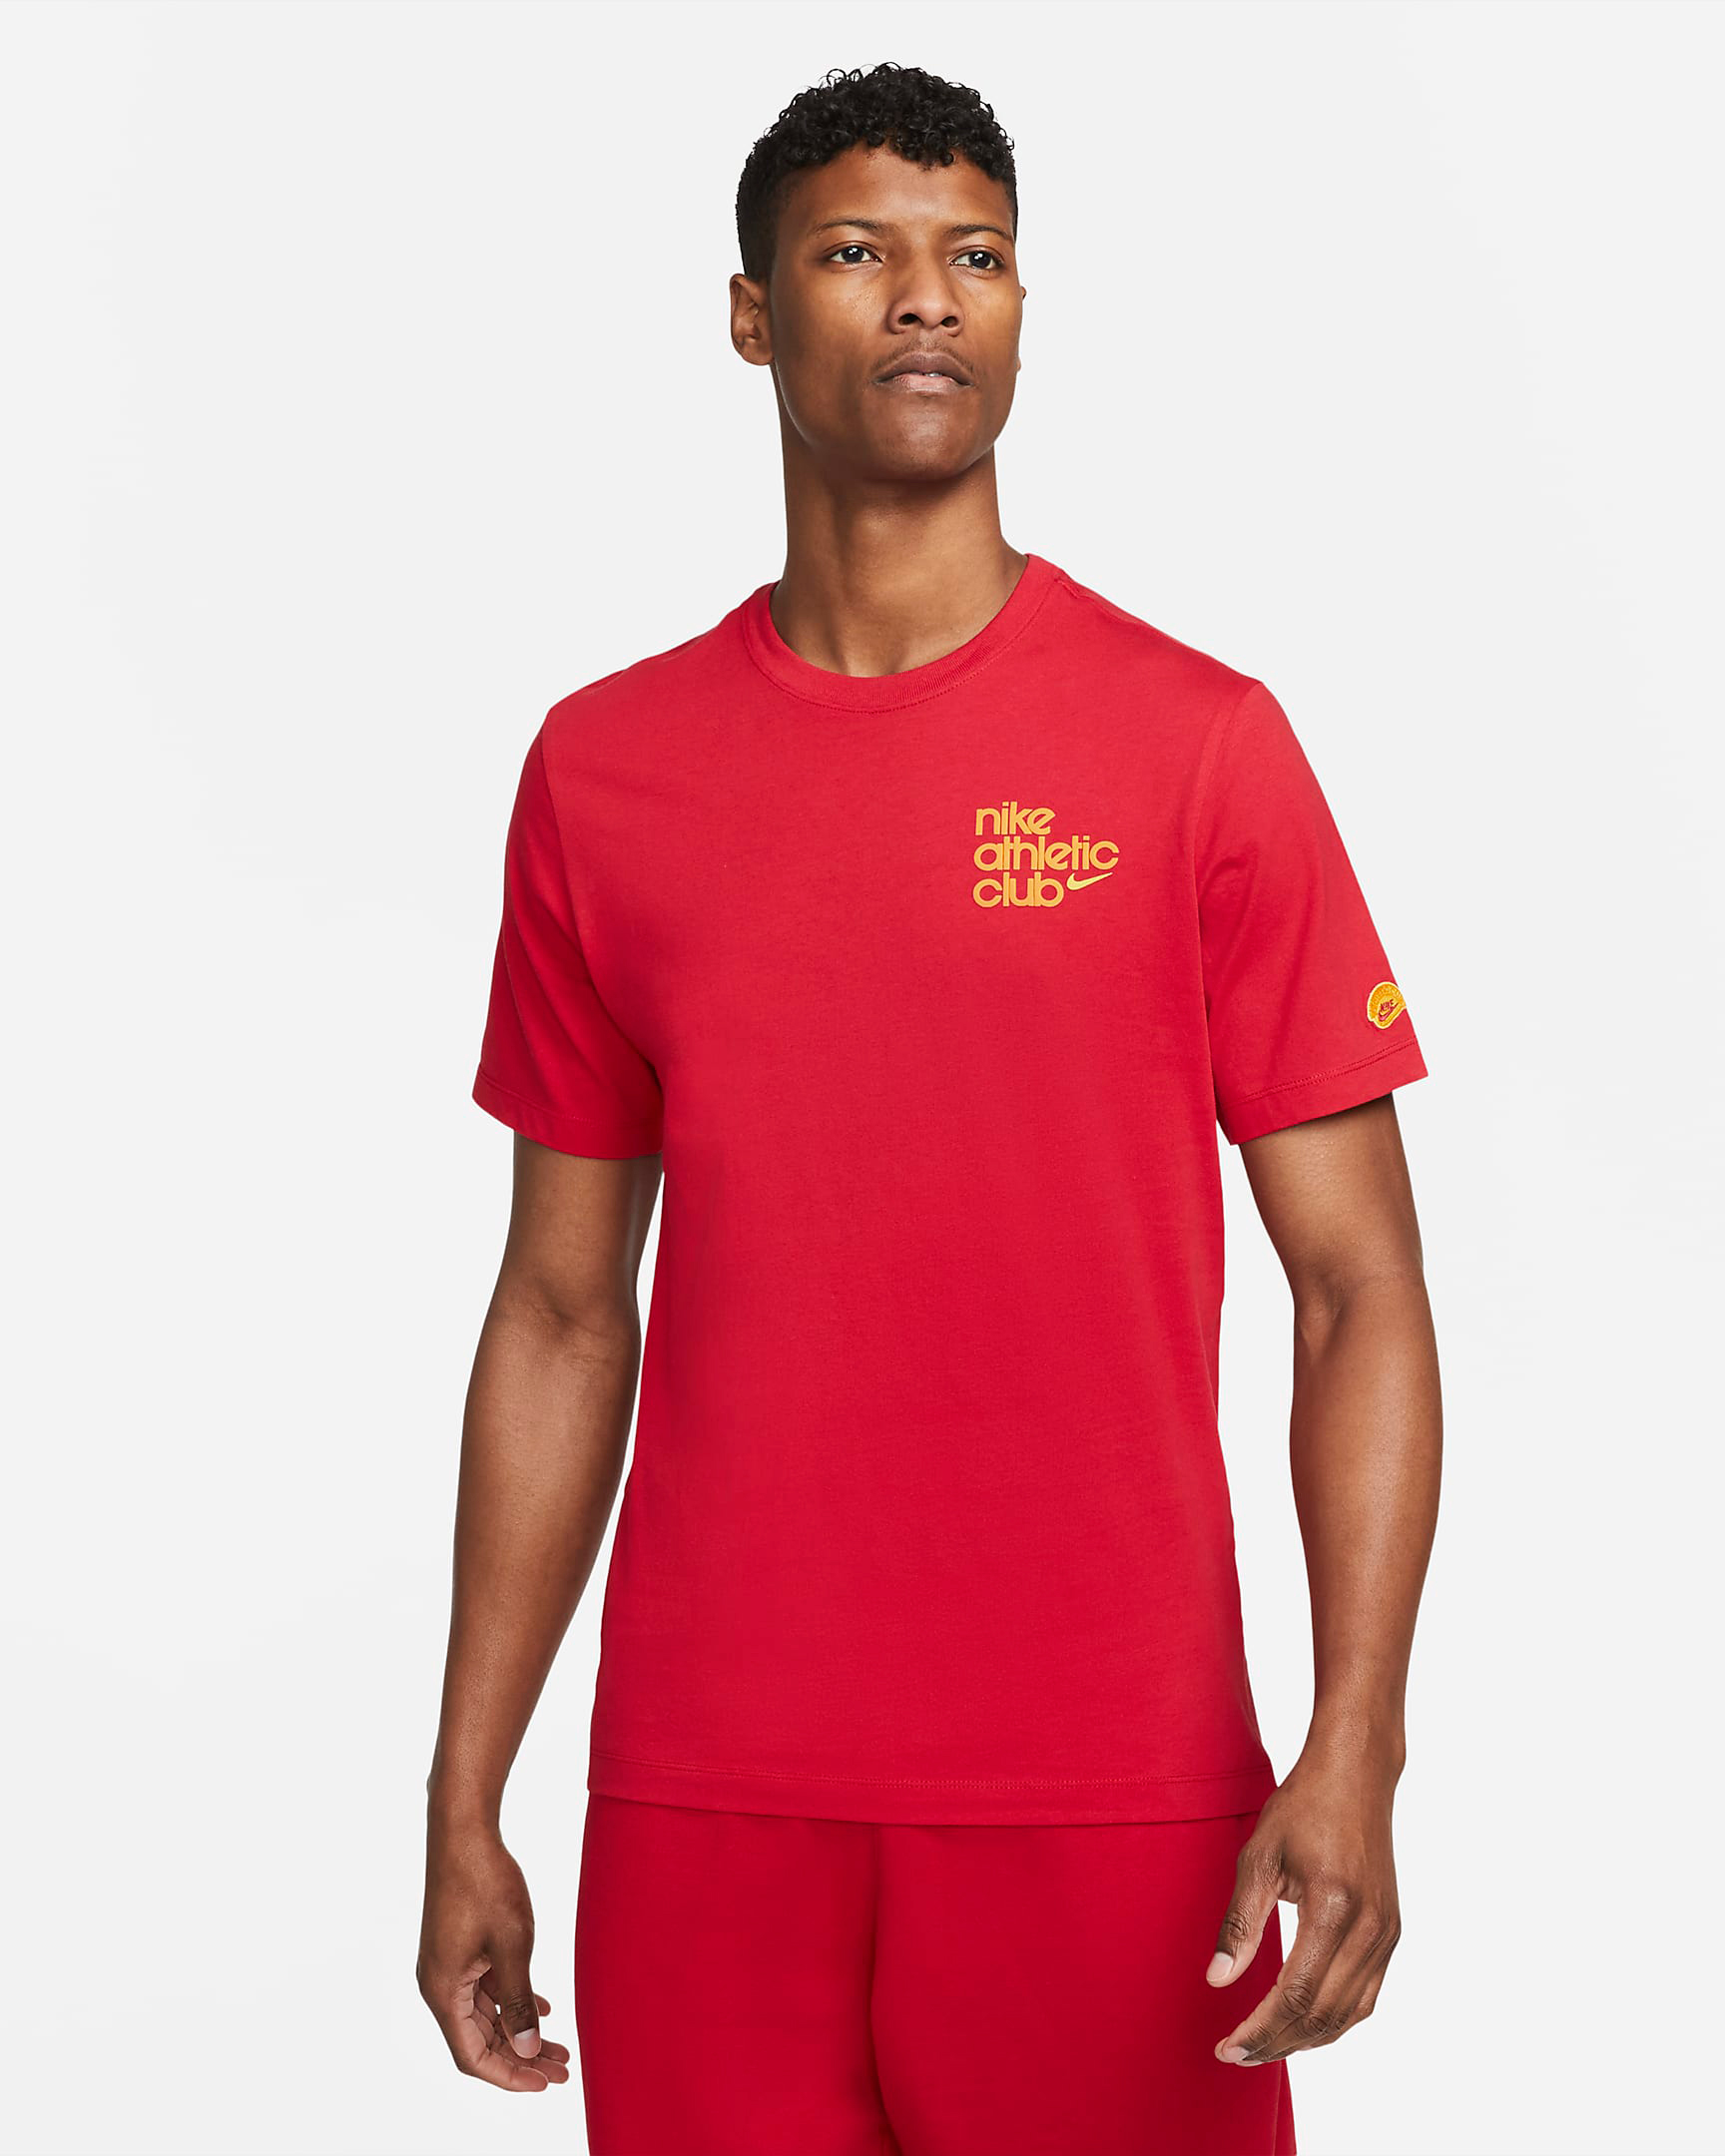 nike-athletic-club-t-shirt-red-yellow-1